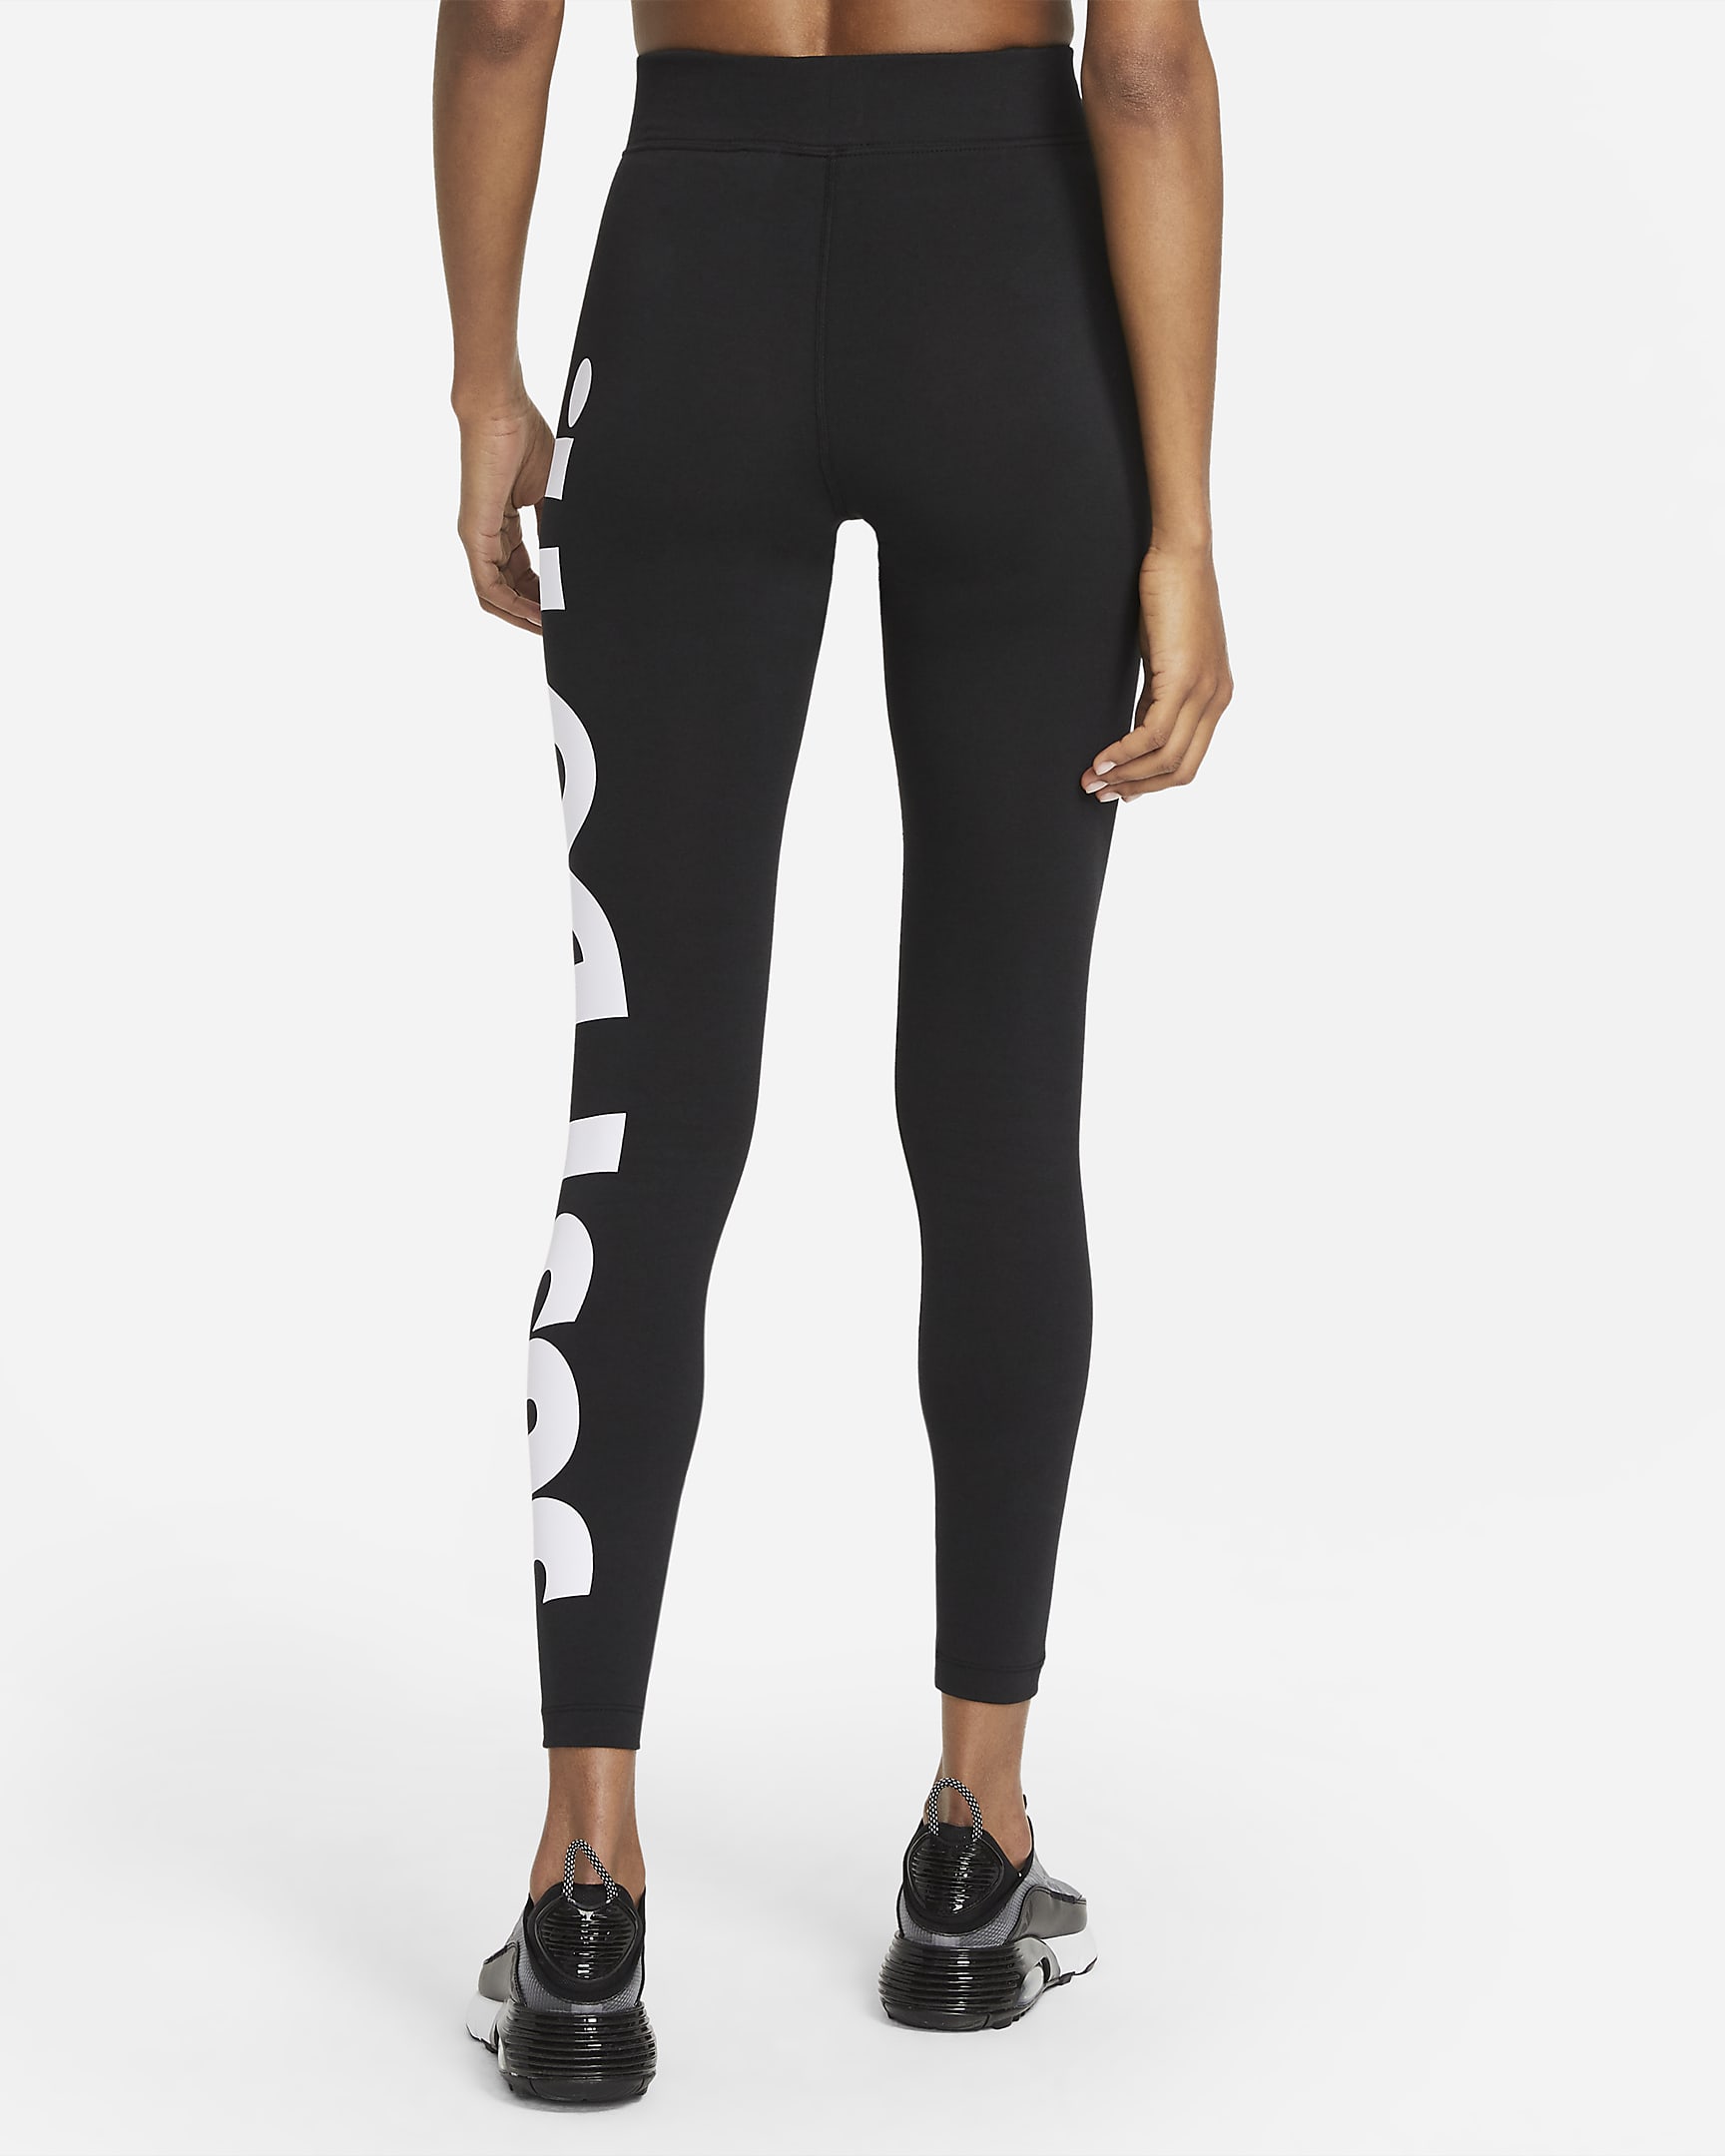 Nike Sportswear Essential Women's High-Waisted Graphic Leggings - Black/White